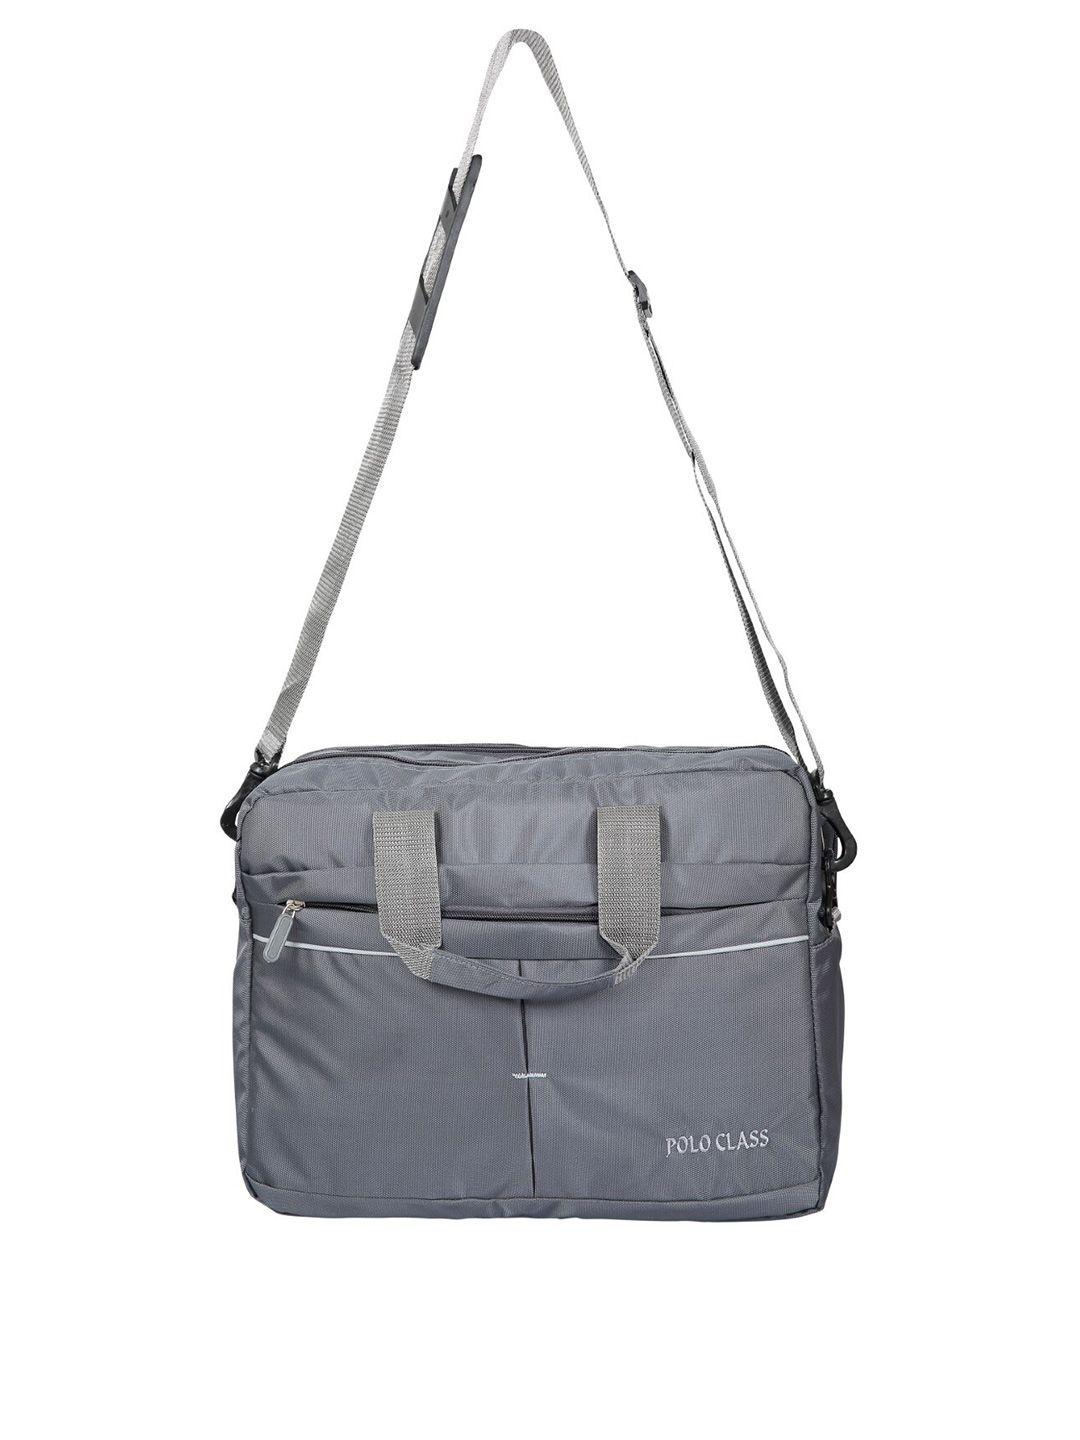 polo class unisex silver-toned laptop bag